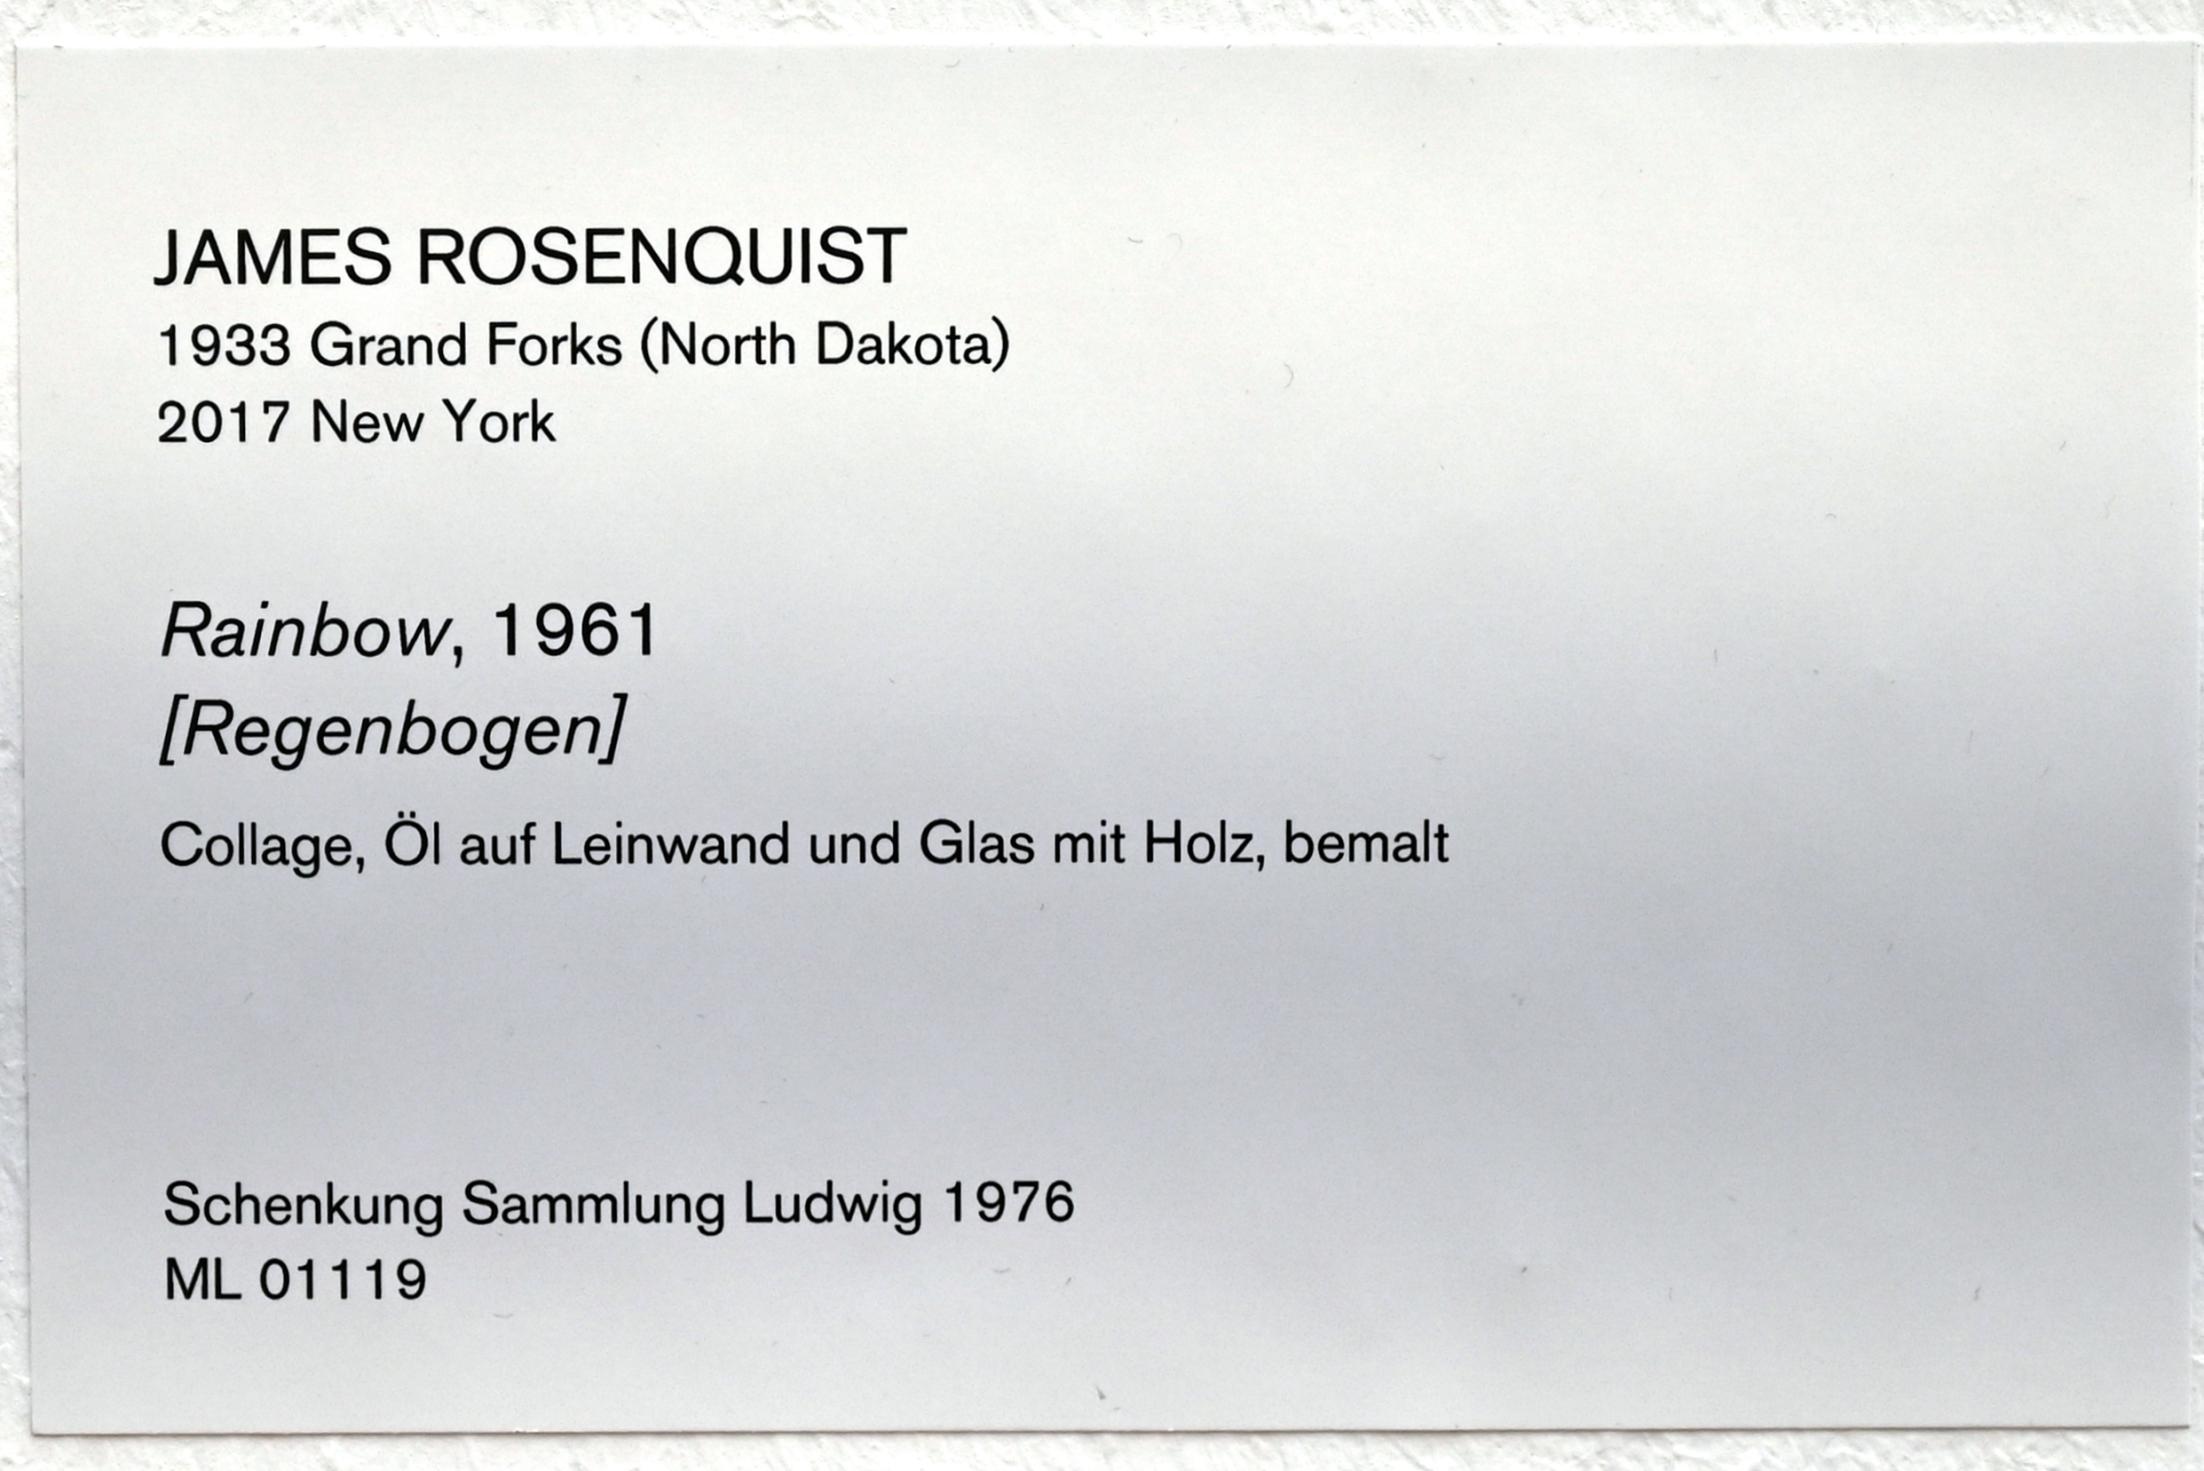 James Rosenquist (1961–1995), Regenbogen, Köln, Museum Ludwig, 01.10, 1961, Bild 2/2